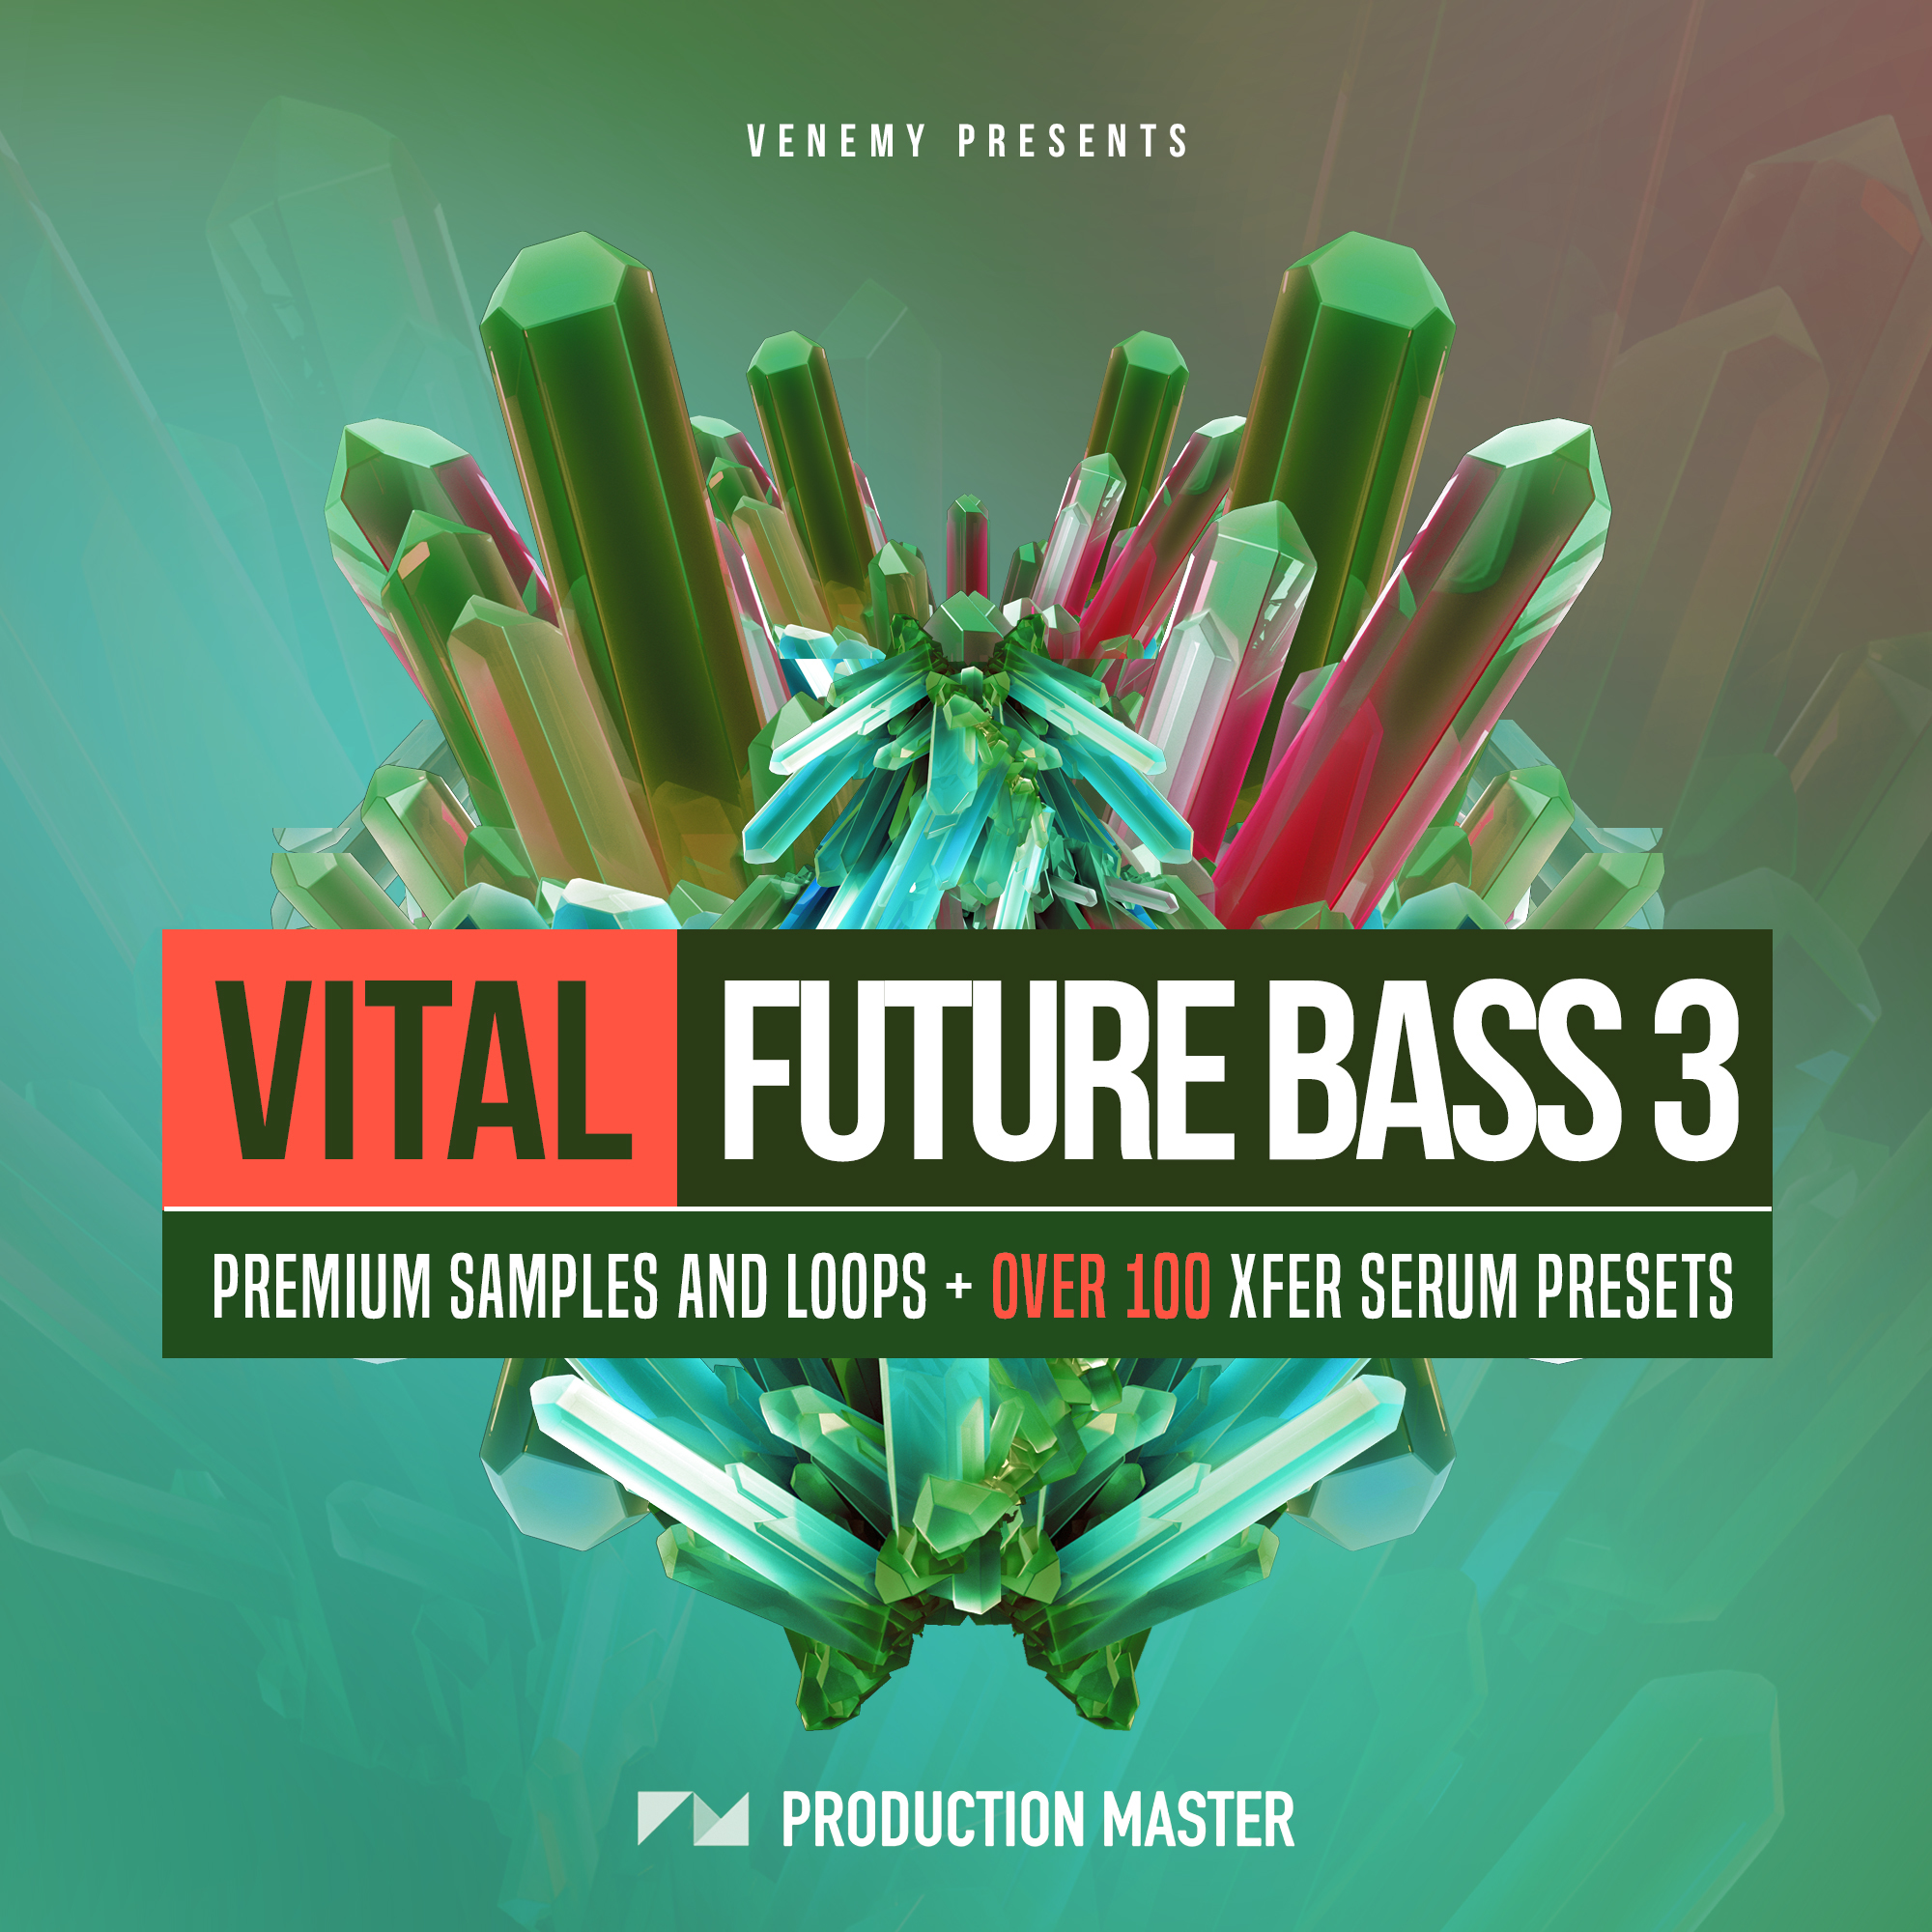 Product masters. Future Bass Serum. Future Bass. Eurobeat Serum presets.